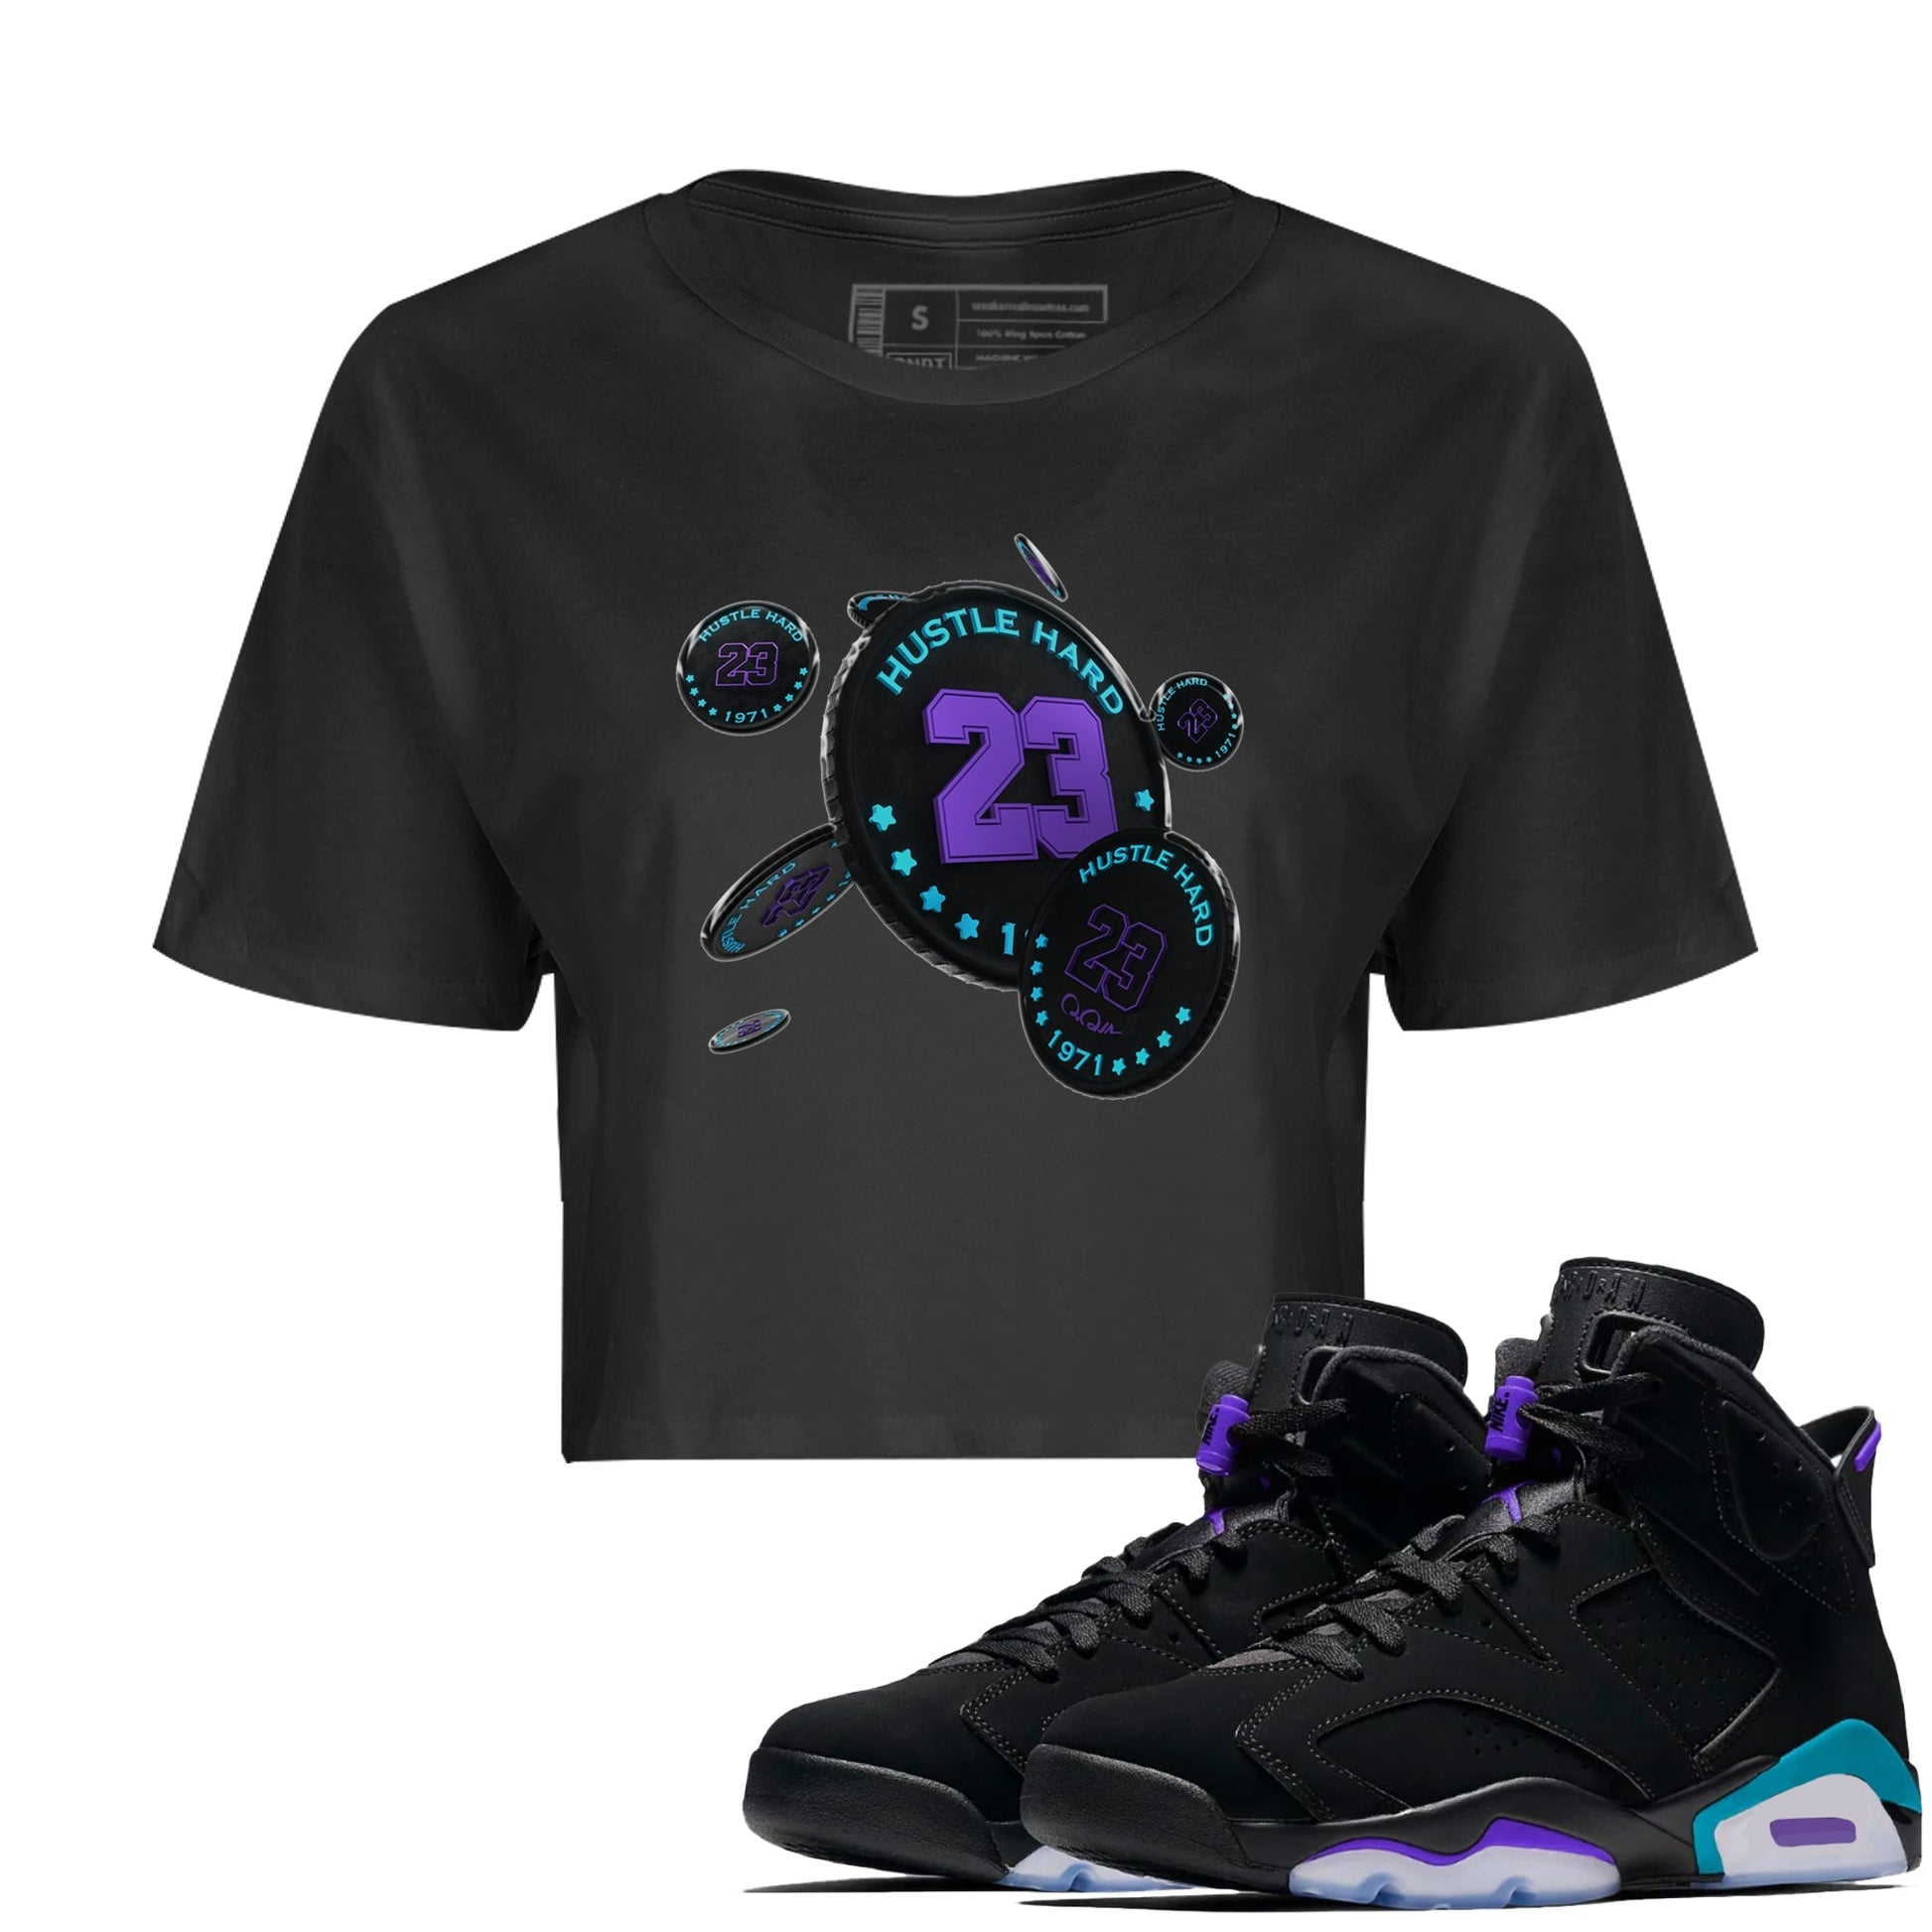 Air Jordan 6 Aqua Sneaker Match Tees Coin Drop Sneaker Tees AJ6 Aqua Sneaker Release Tees Women's Shirts Black 1